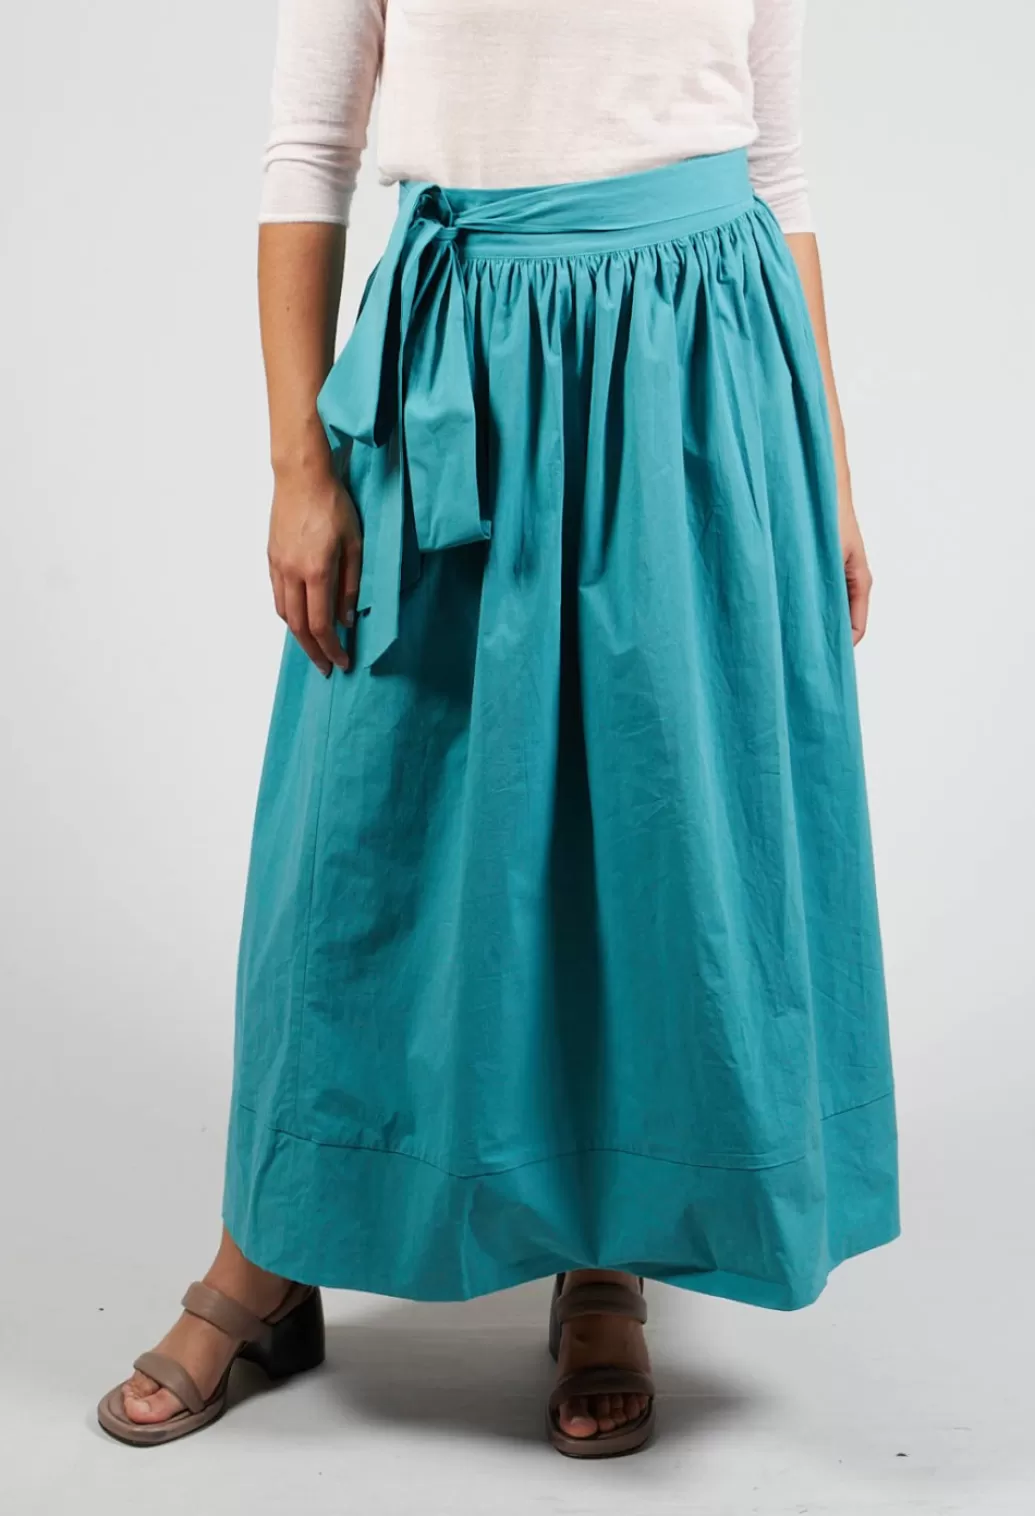 Skirts^Apuntob Sash Skirt In Turquoise